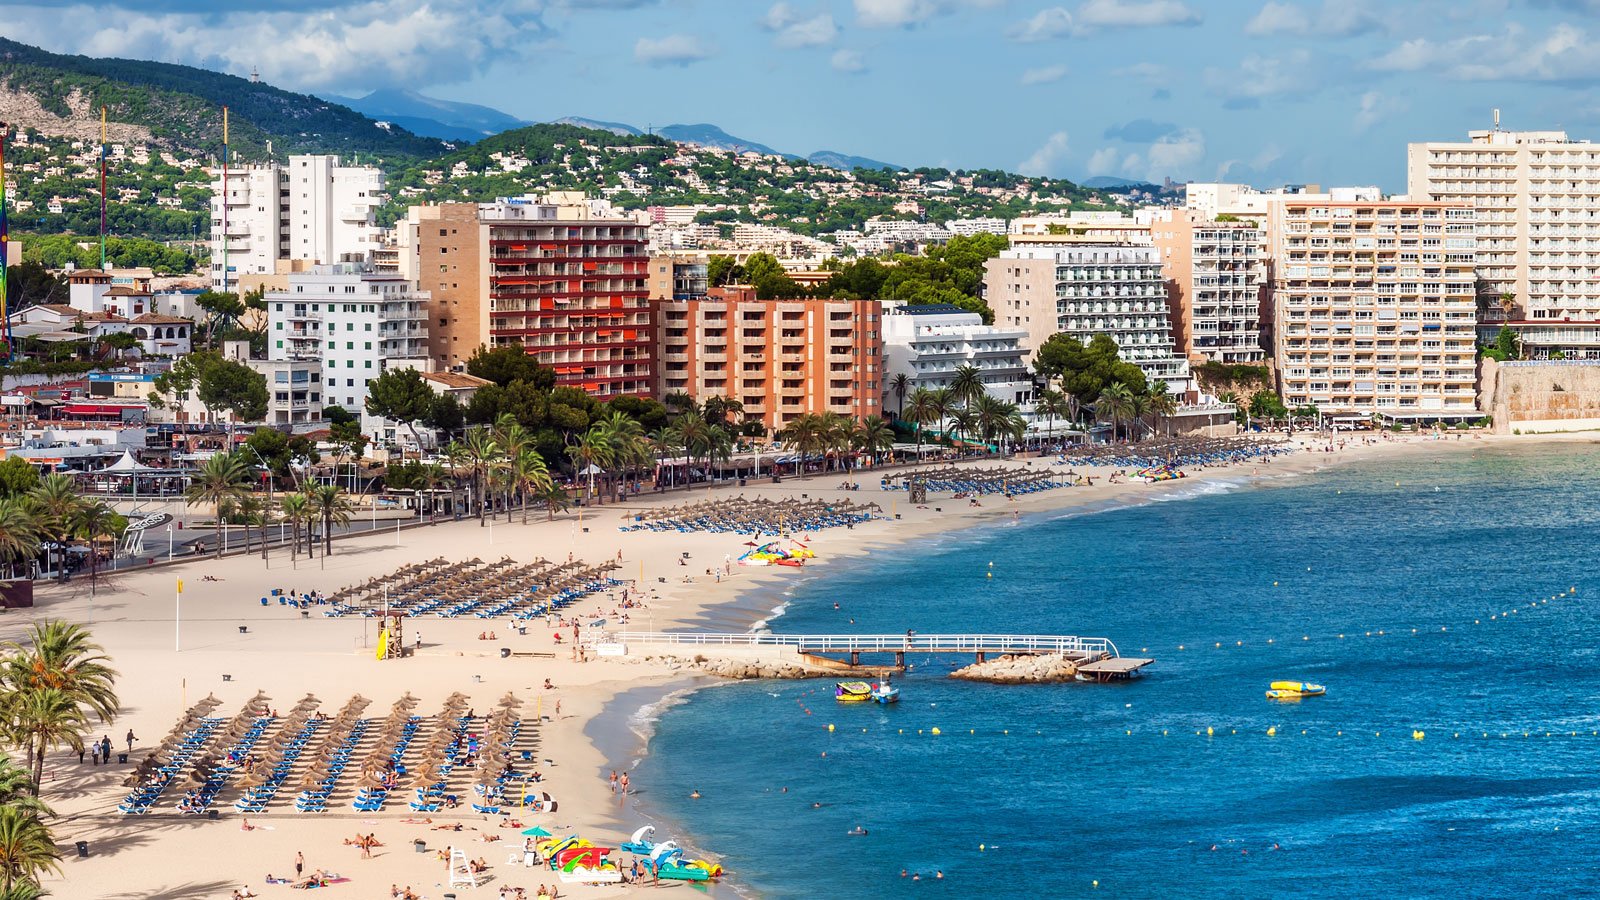 alt=Alt text: "City beach in Majorca with towering buildings and a serene blue ocean."